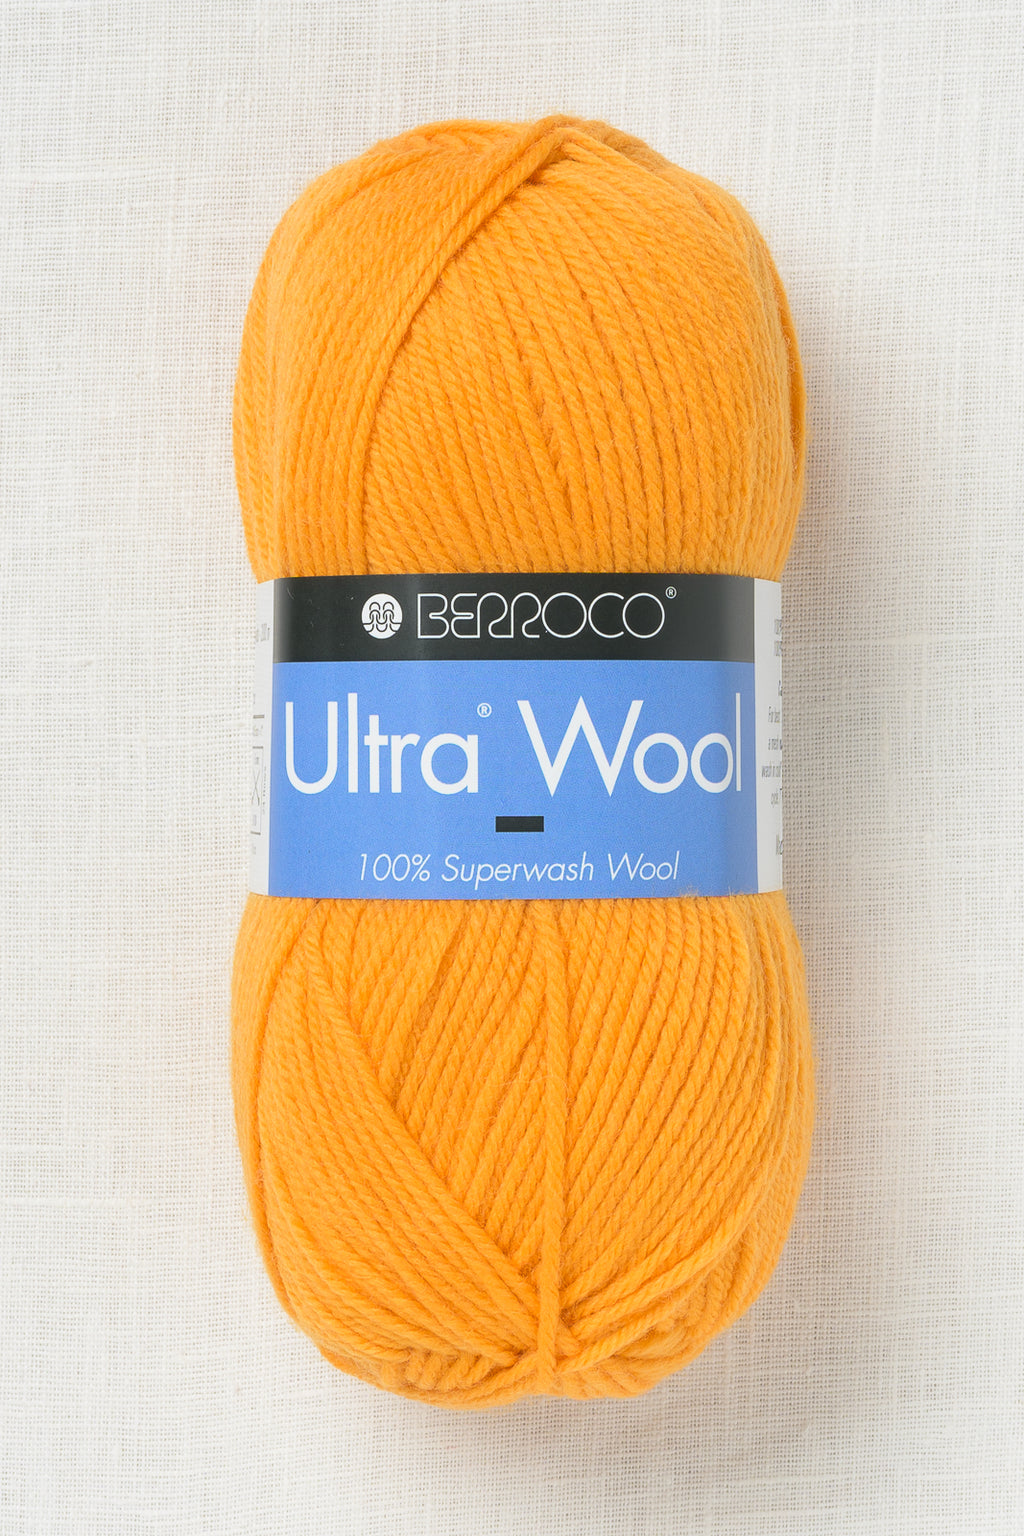 Berroco Ultra Wool 3348 Orange